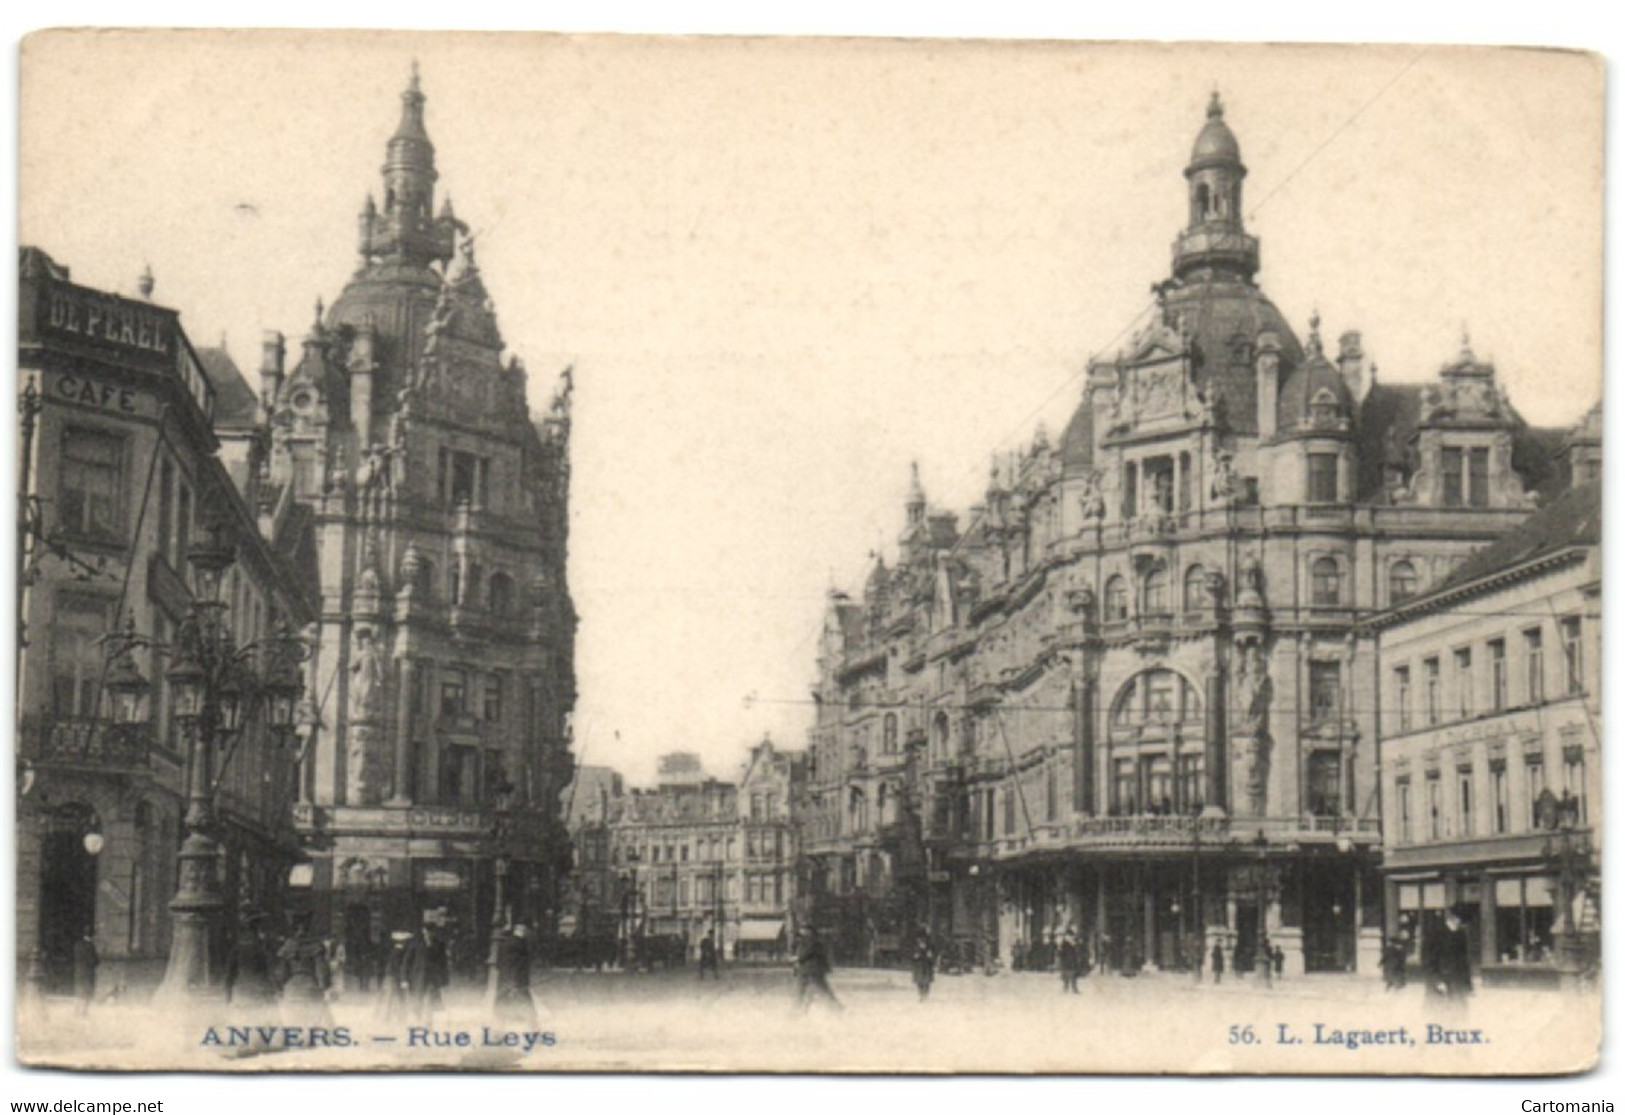 Anvers - Rue Leys - Antwerpen